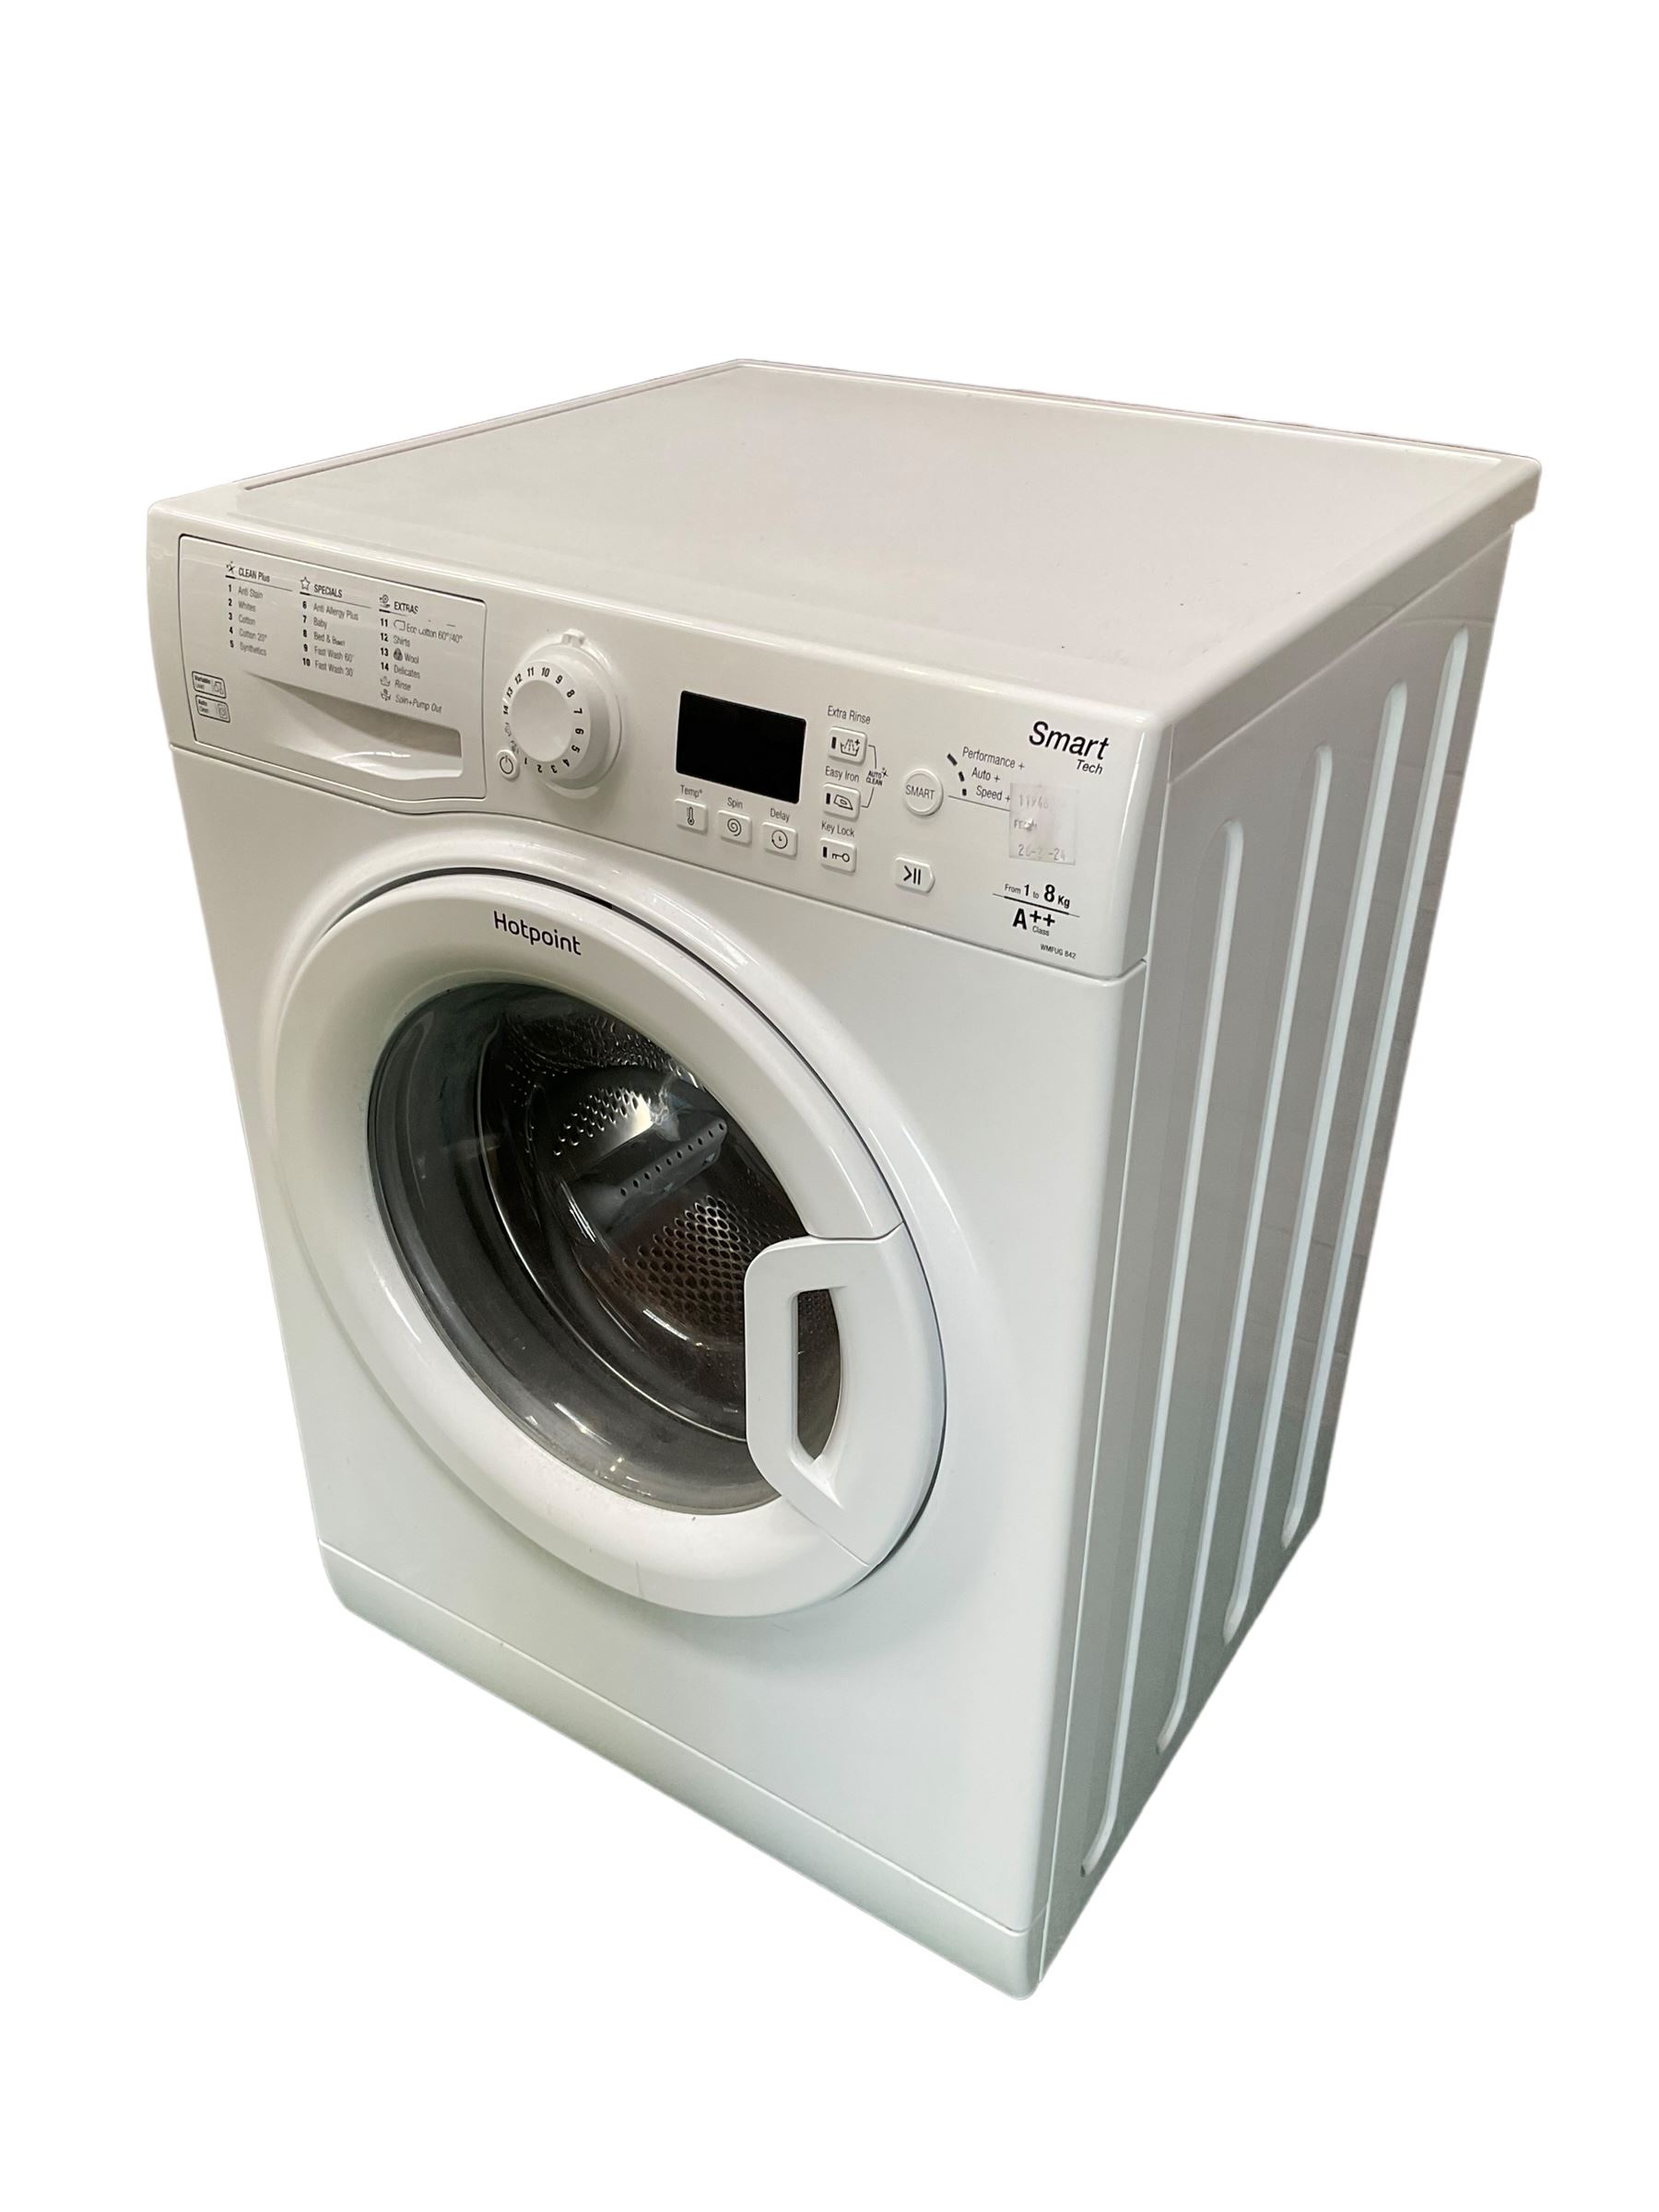 Hotpoint 8kg washing machine in white - Image 3 of 3